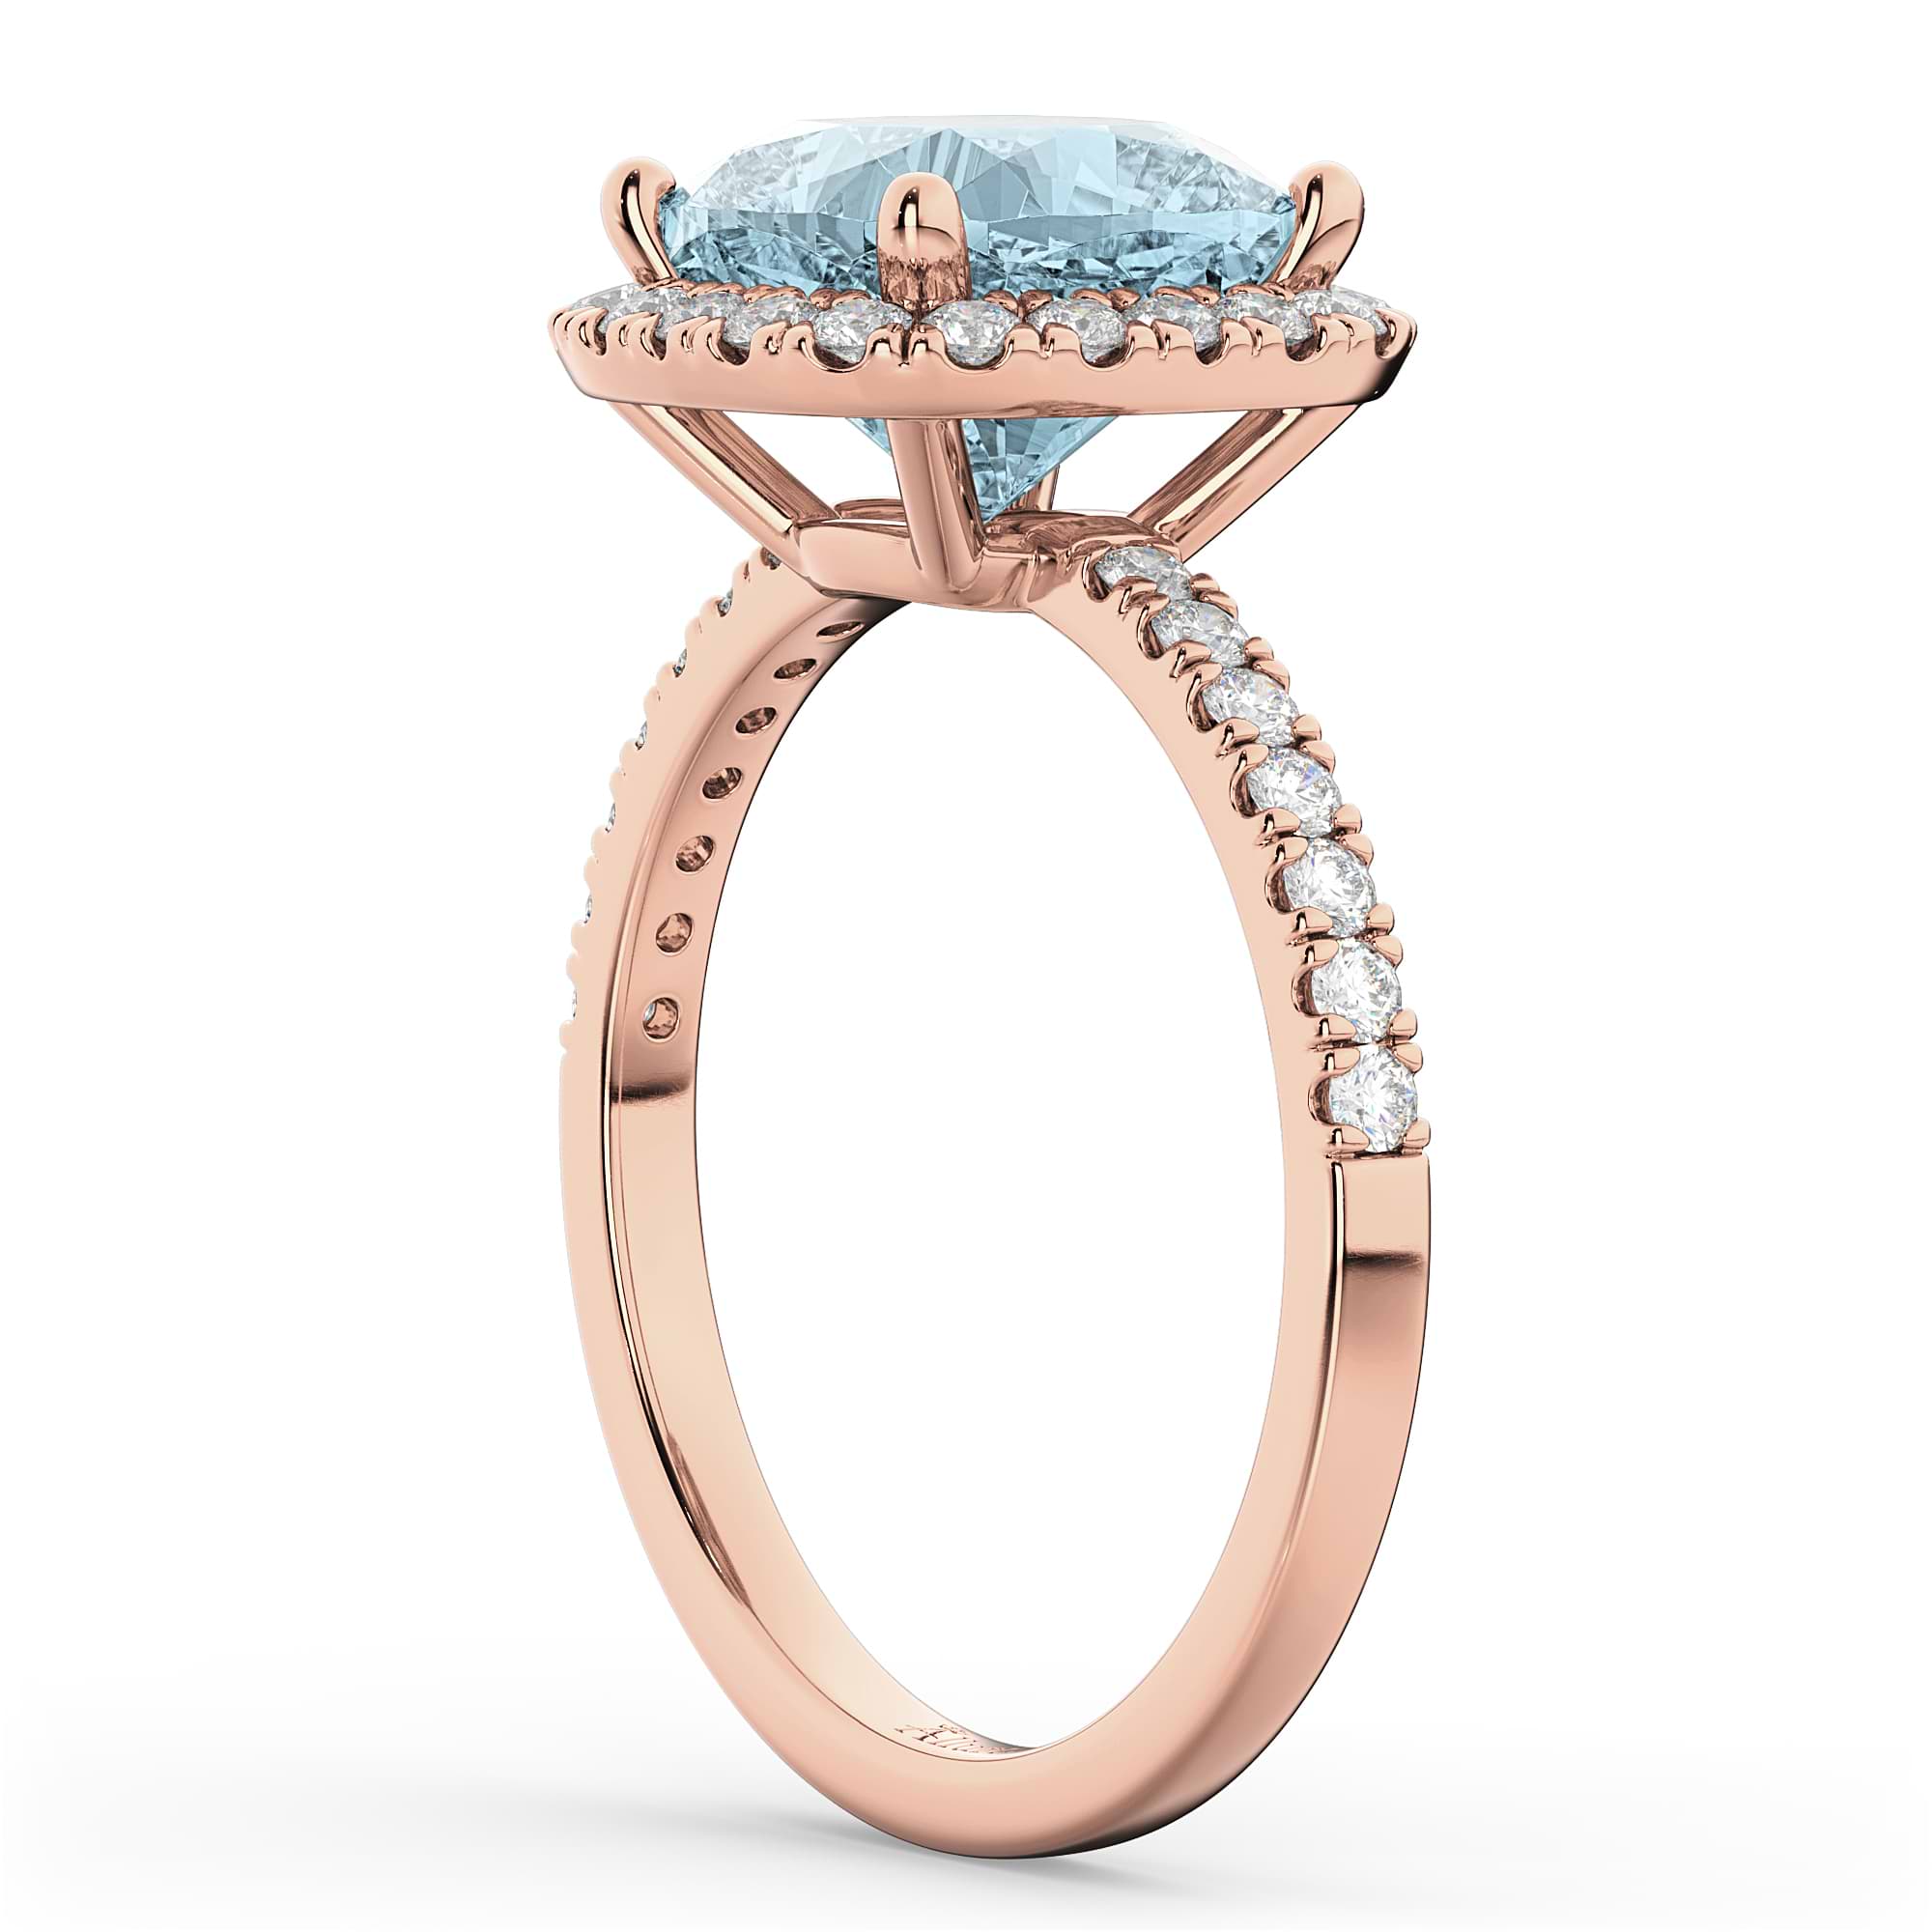 Cushion Cut Halo Aquamarine & Diamond Engagement Ring 14k Rose Gold (3.11ct)